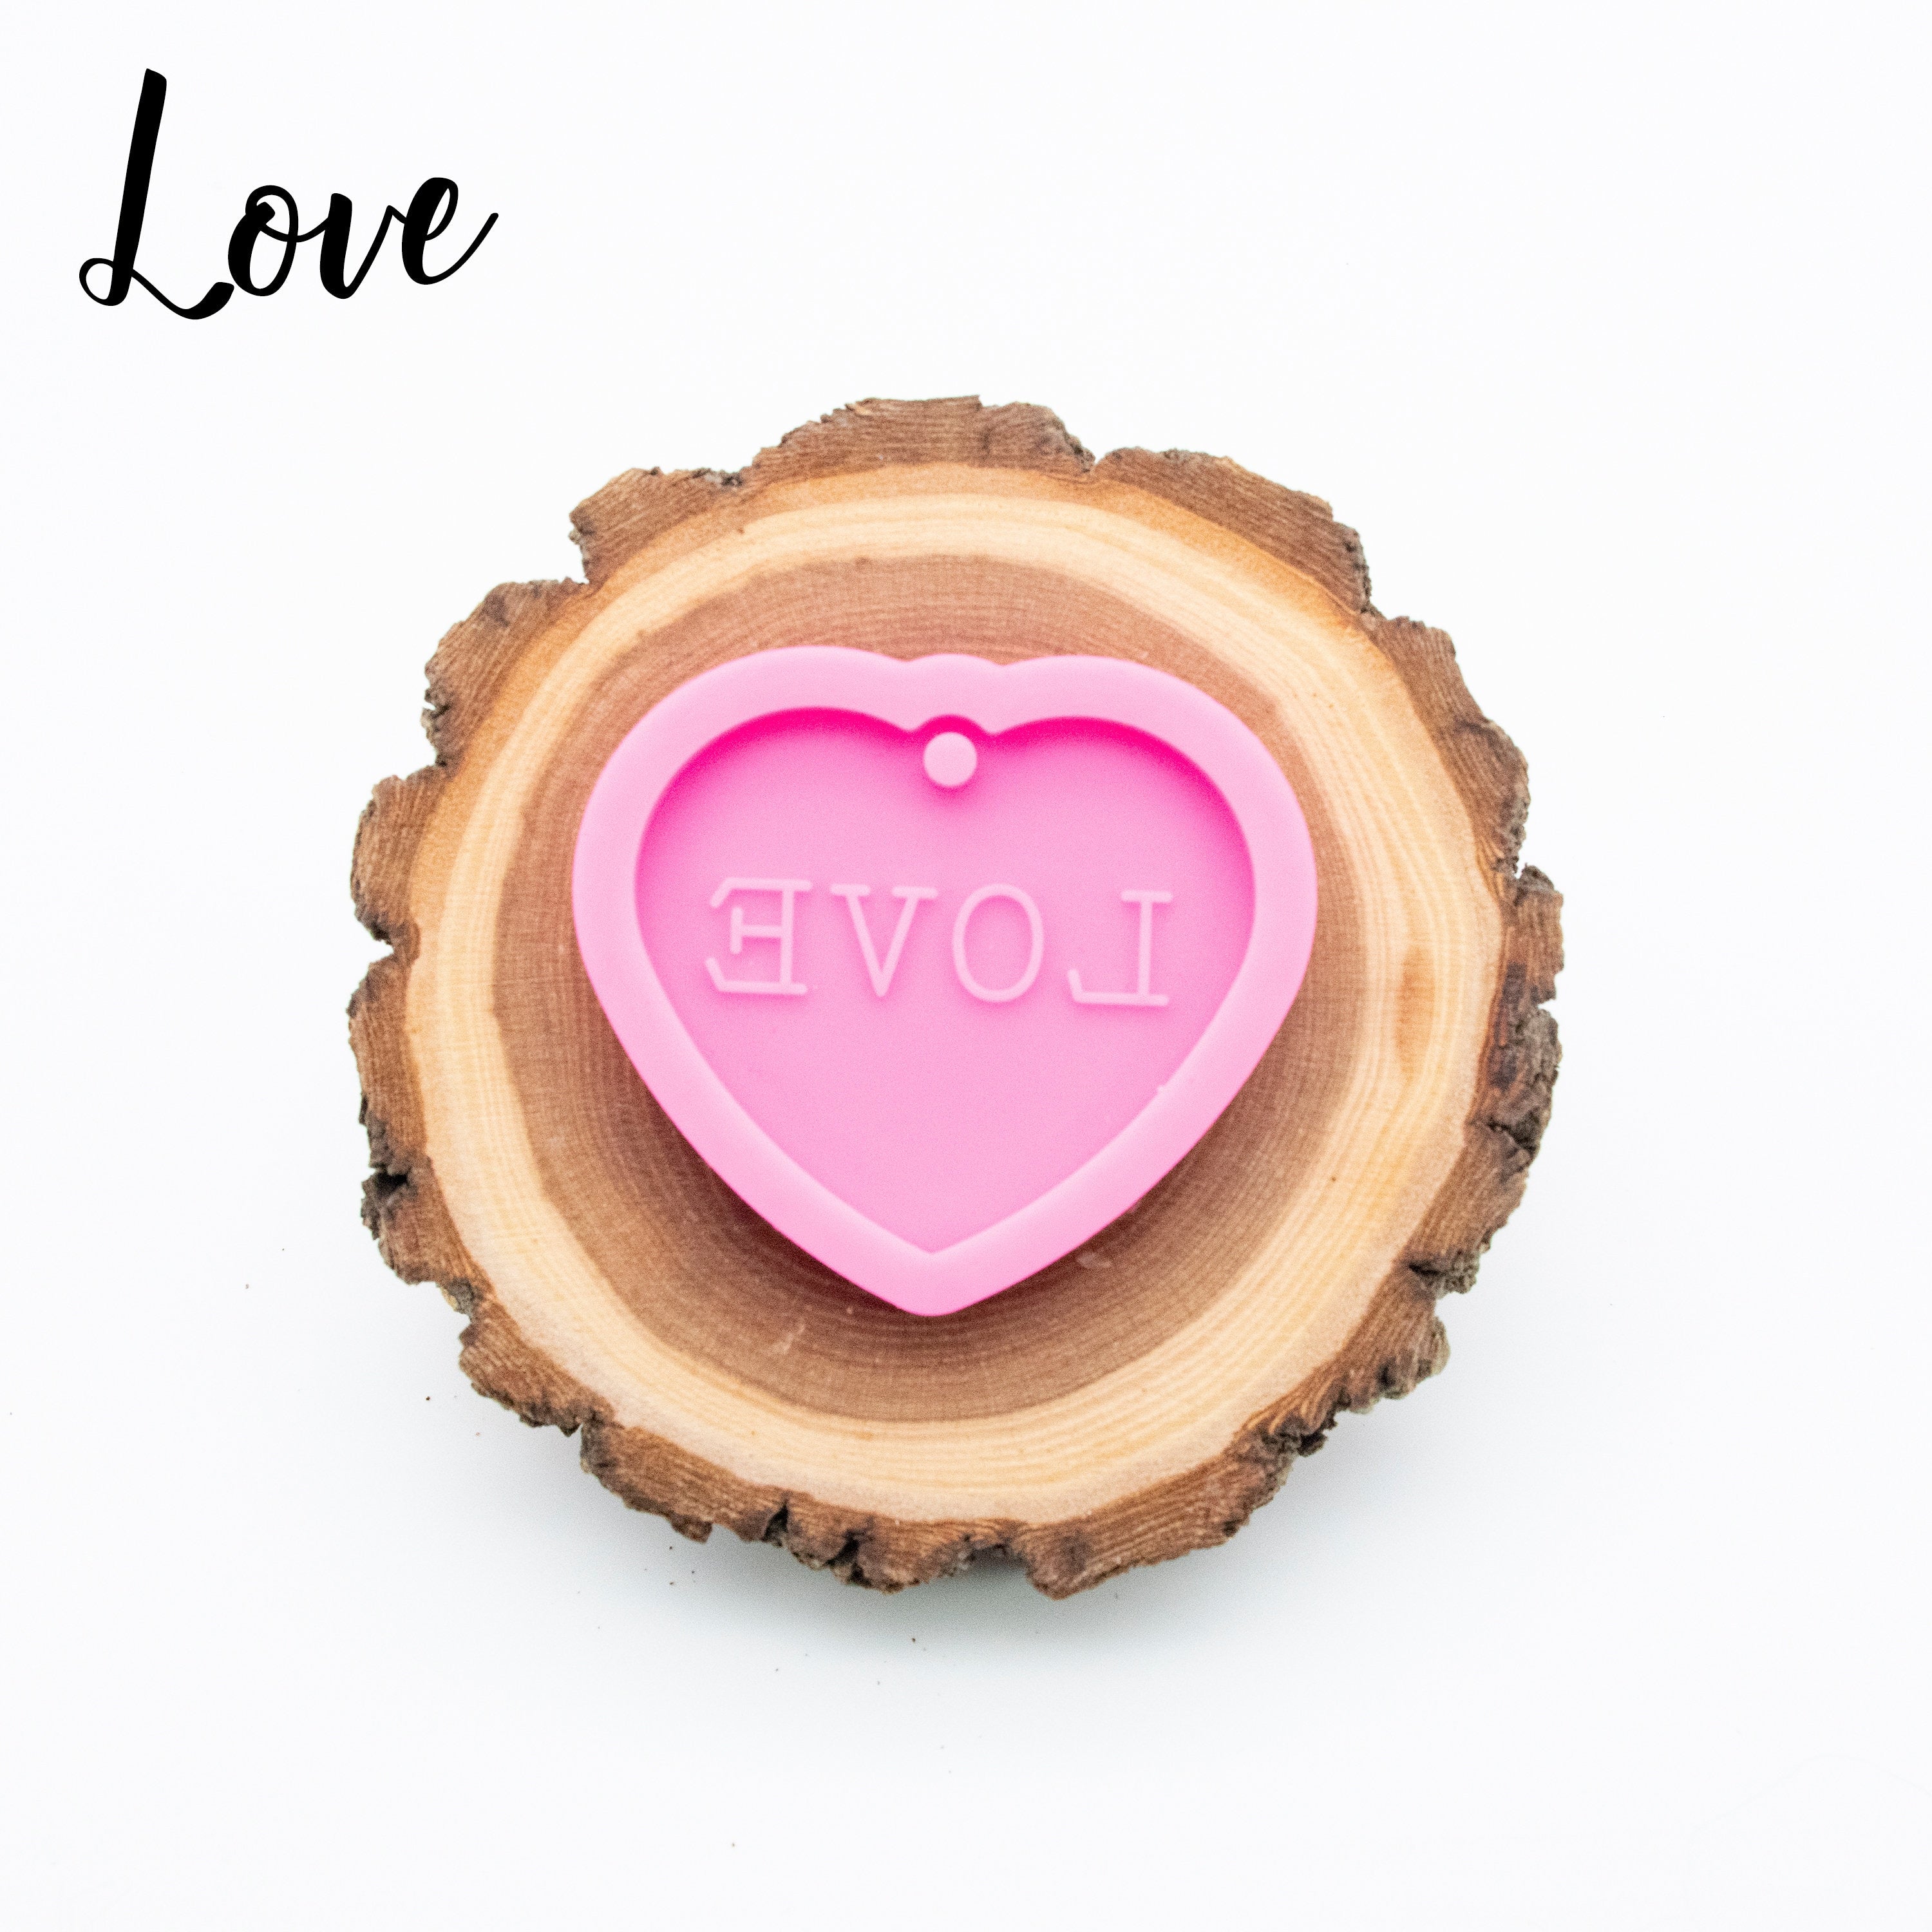 Heart Sayings - Love, Hug Me, Kiss Me, XOXO - Shiny Silicone Mold for Epoxy Resin Jewelry Making